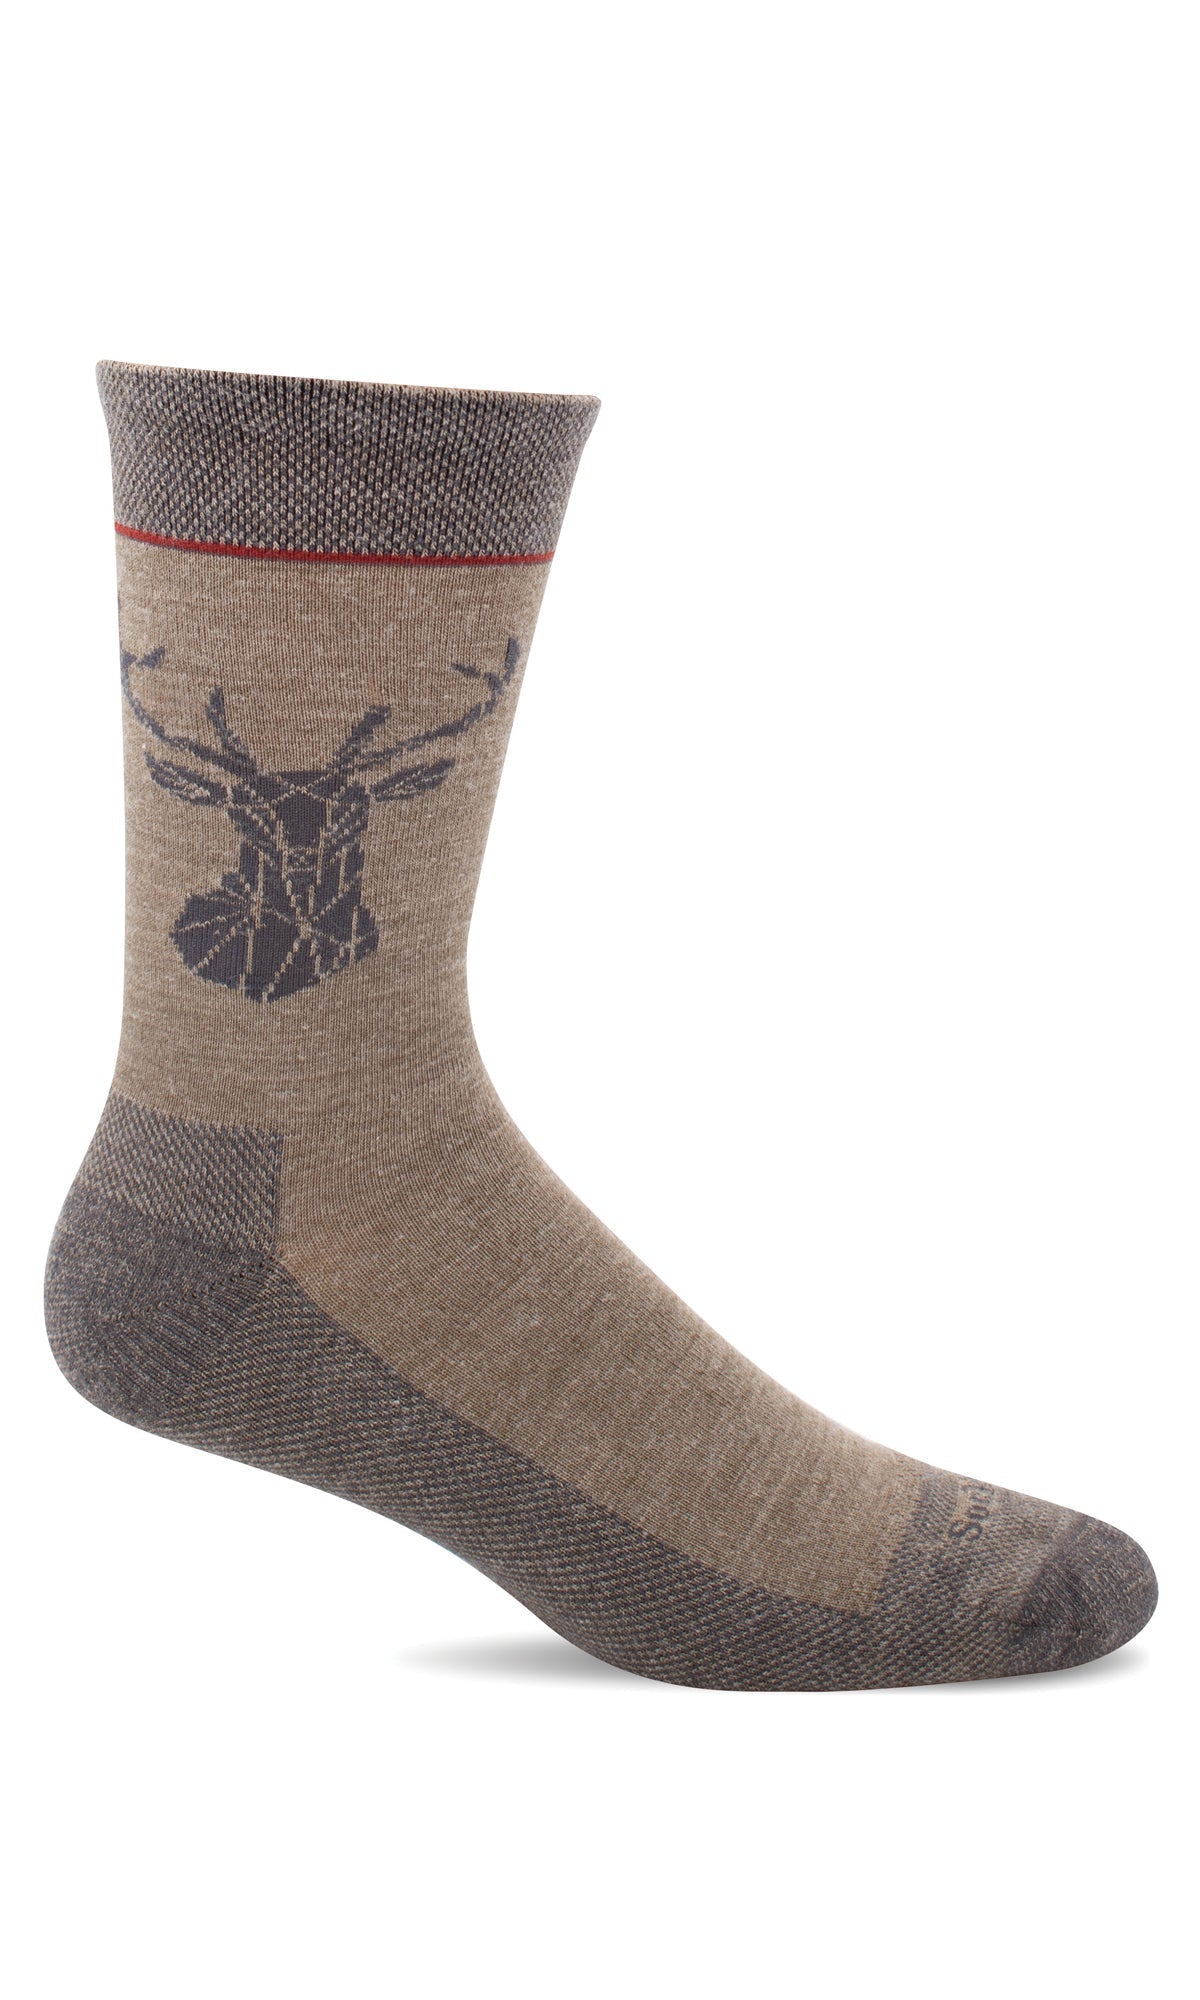 Men's Tender Foot | Essential Comfort Socks - Merino Wool Essential Comfort - Sockwell